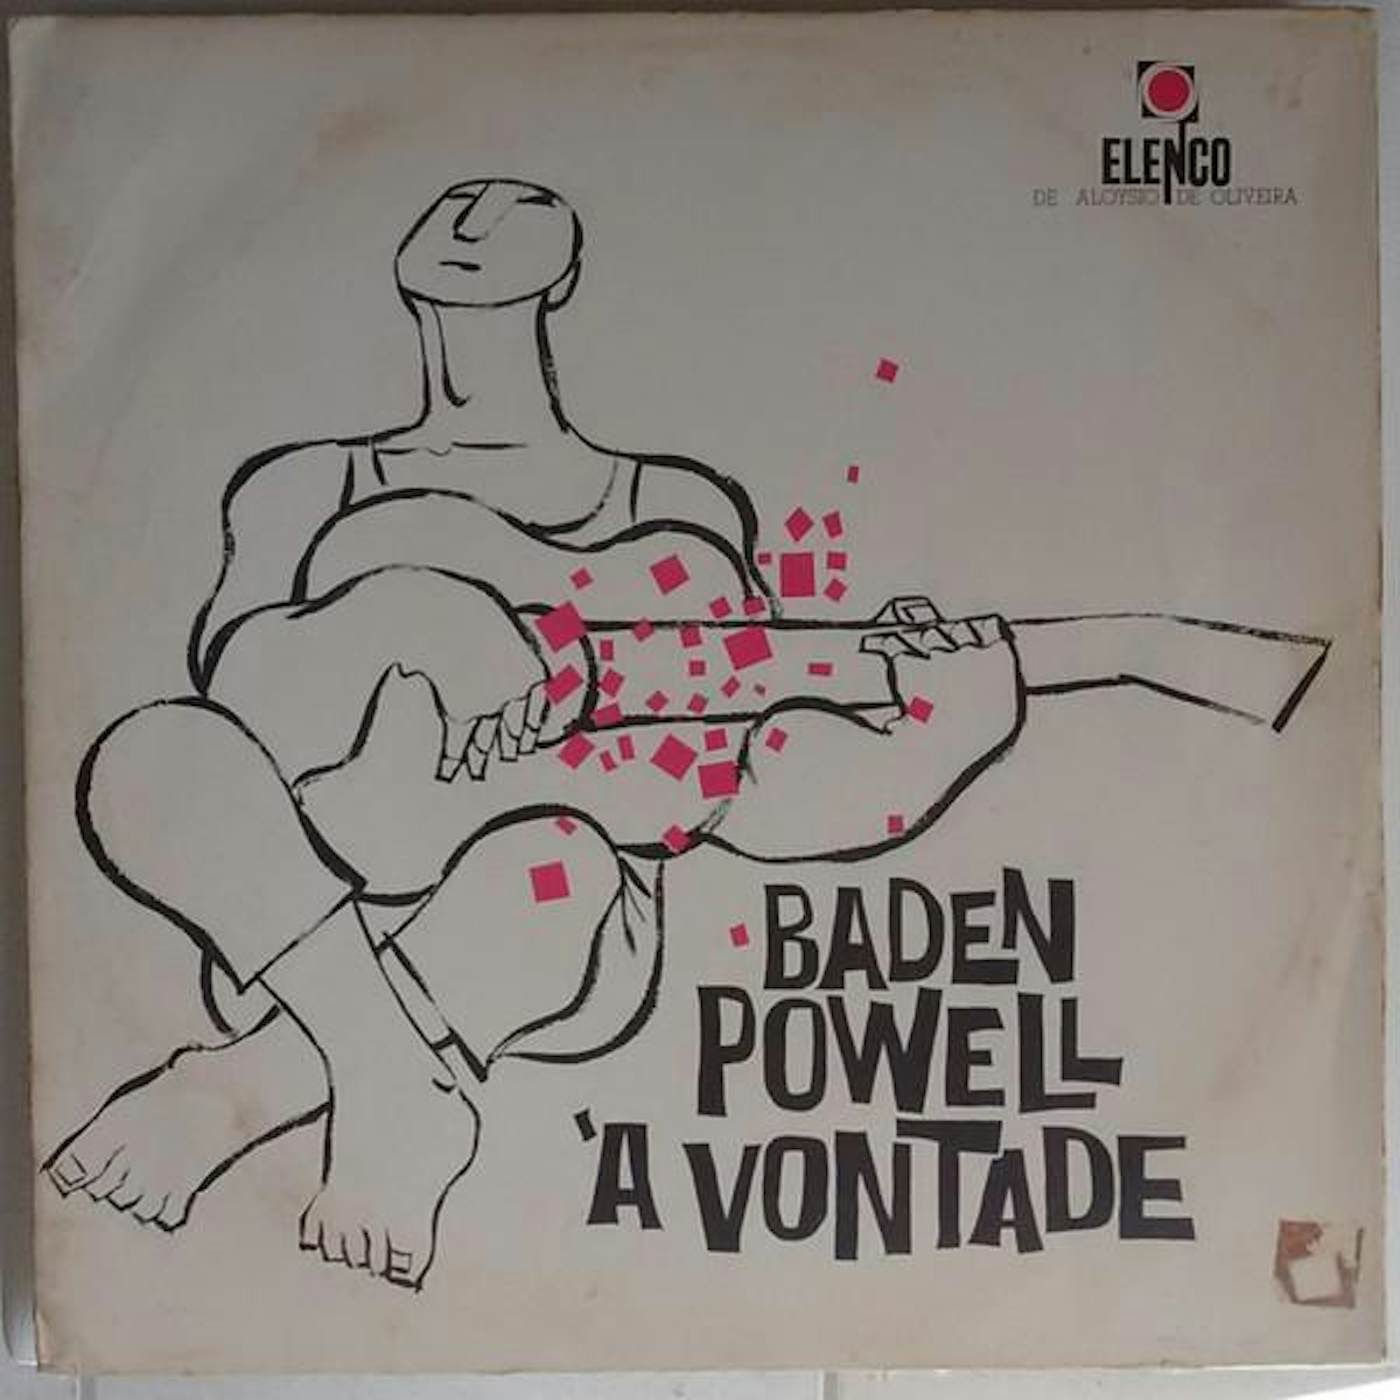 BADEN POWELL A VONTADE Vinyl Record